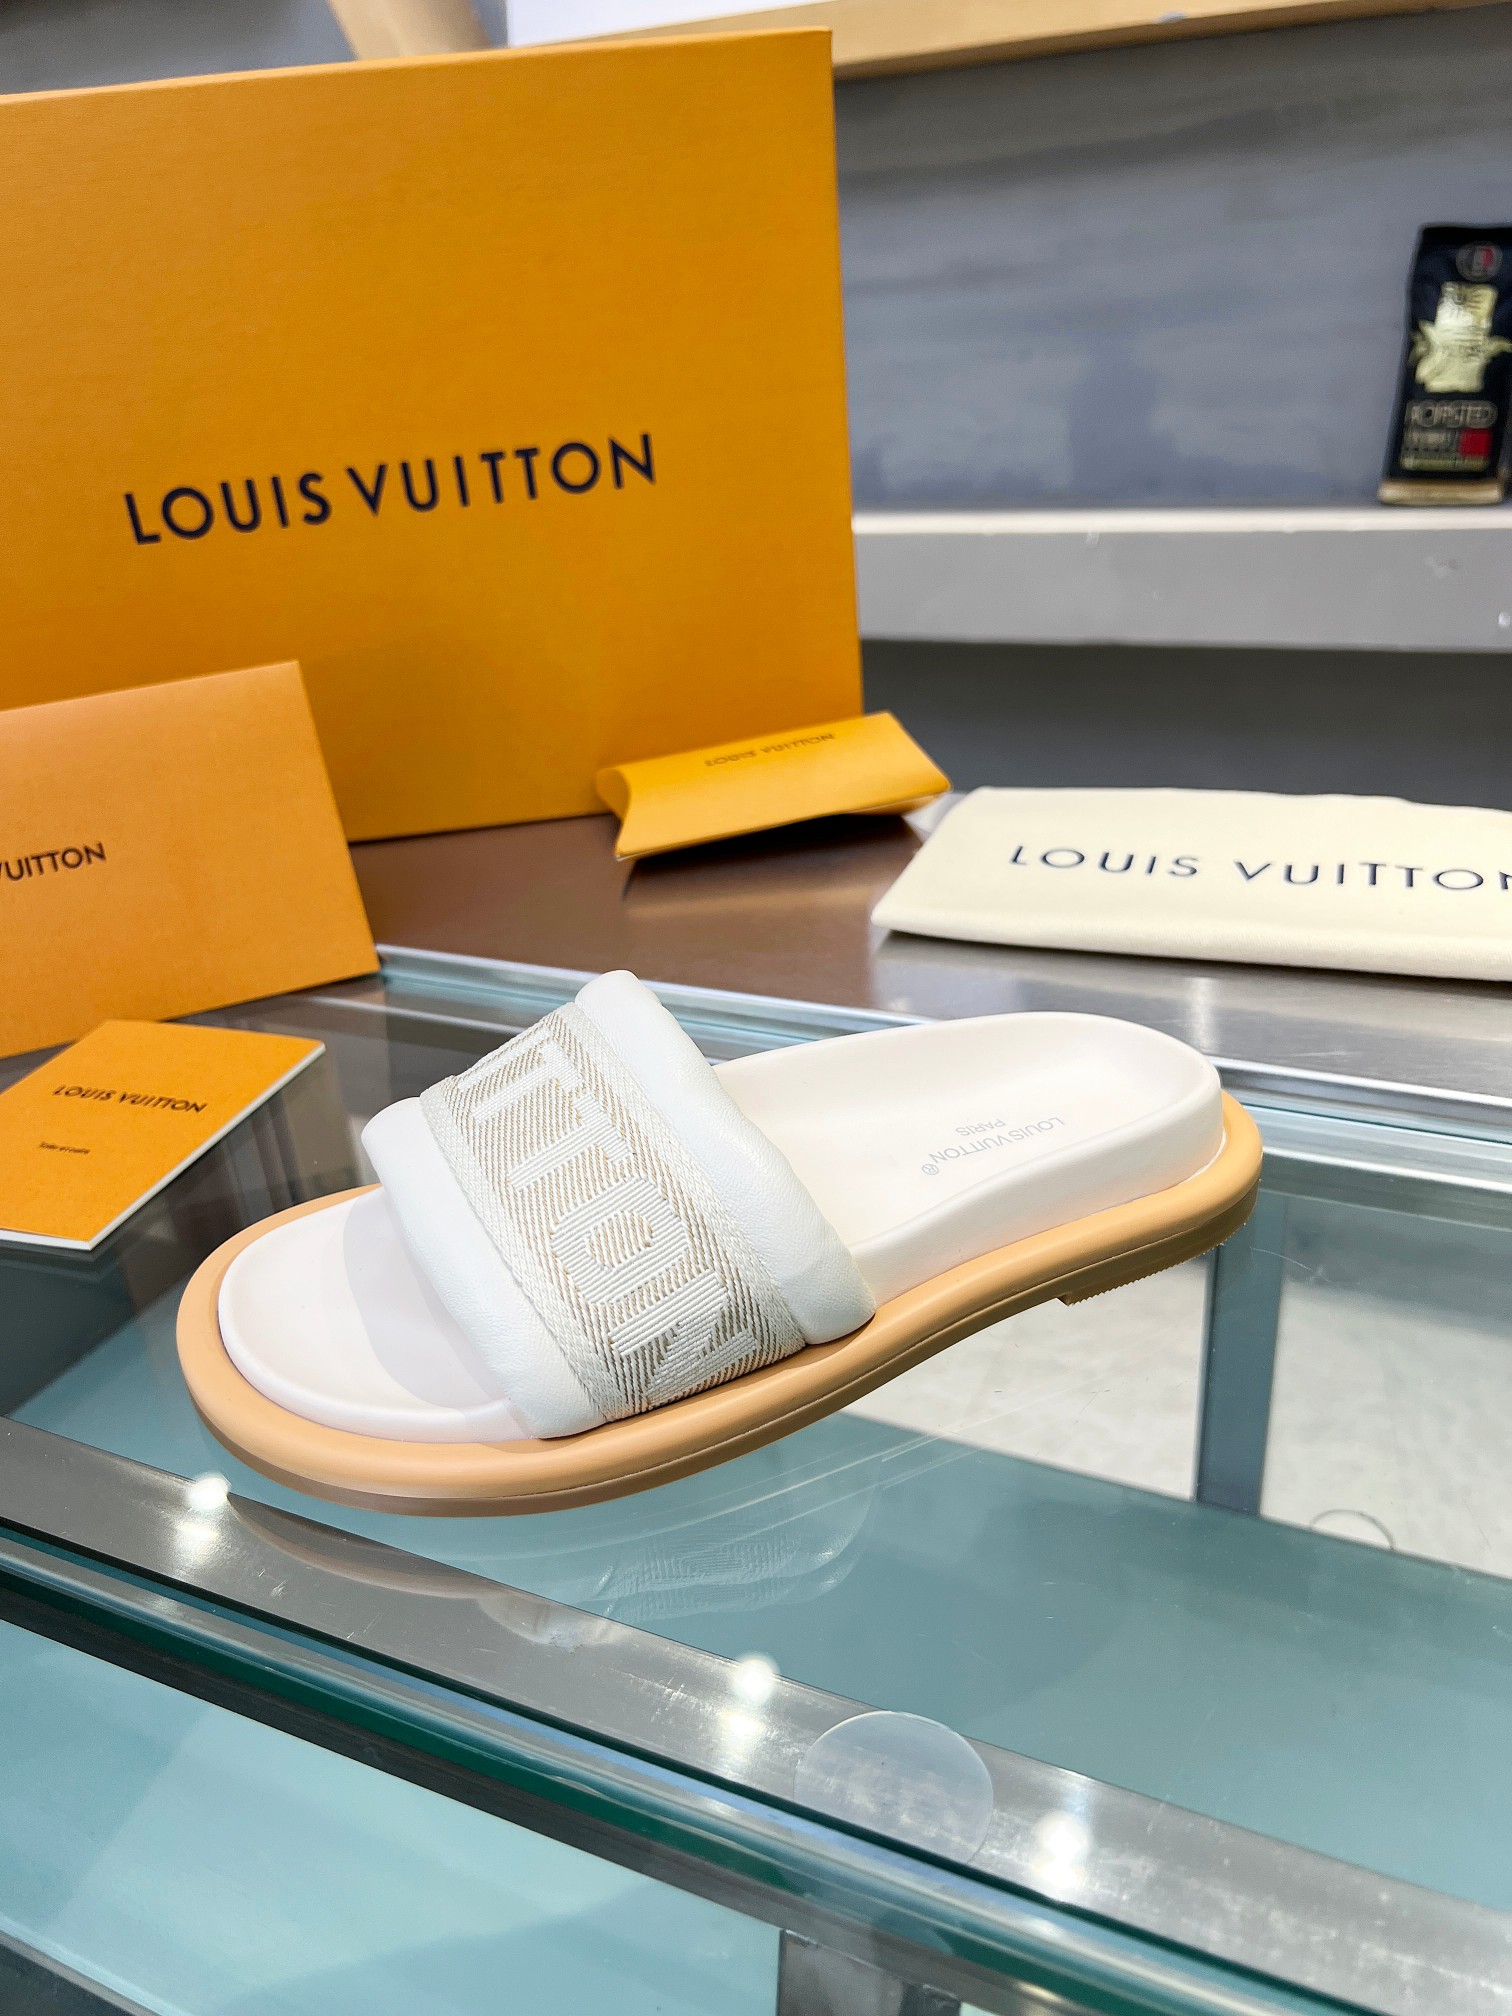 Louis Vuitton Scarpe Sandali Pantofole Beige Nero Grigio Bianco Unisex Pelle di pecora Fashion Casual